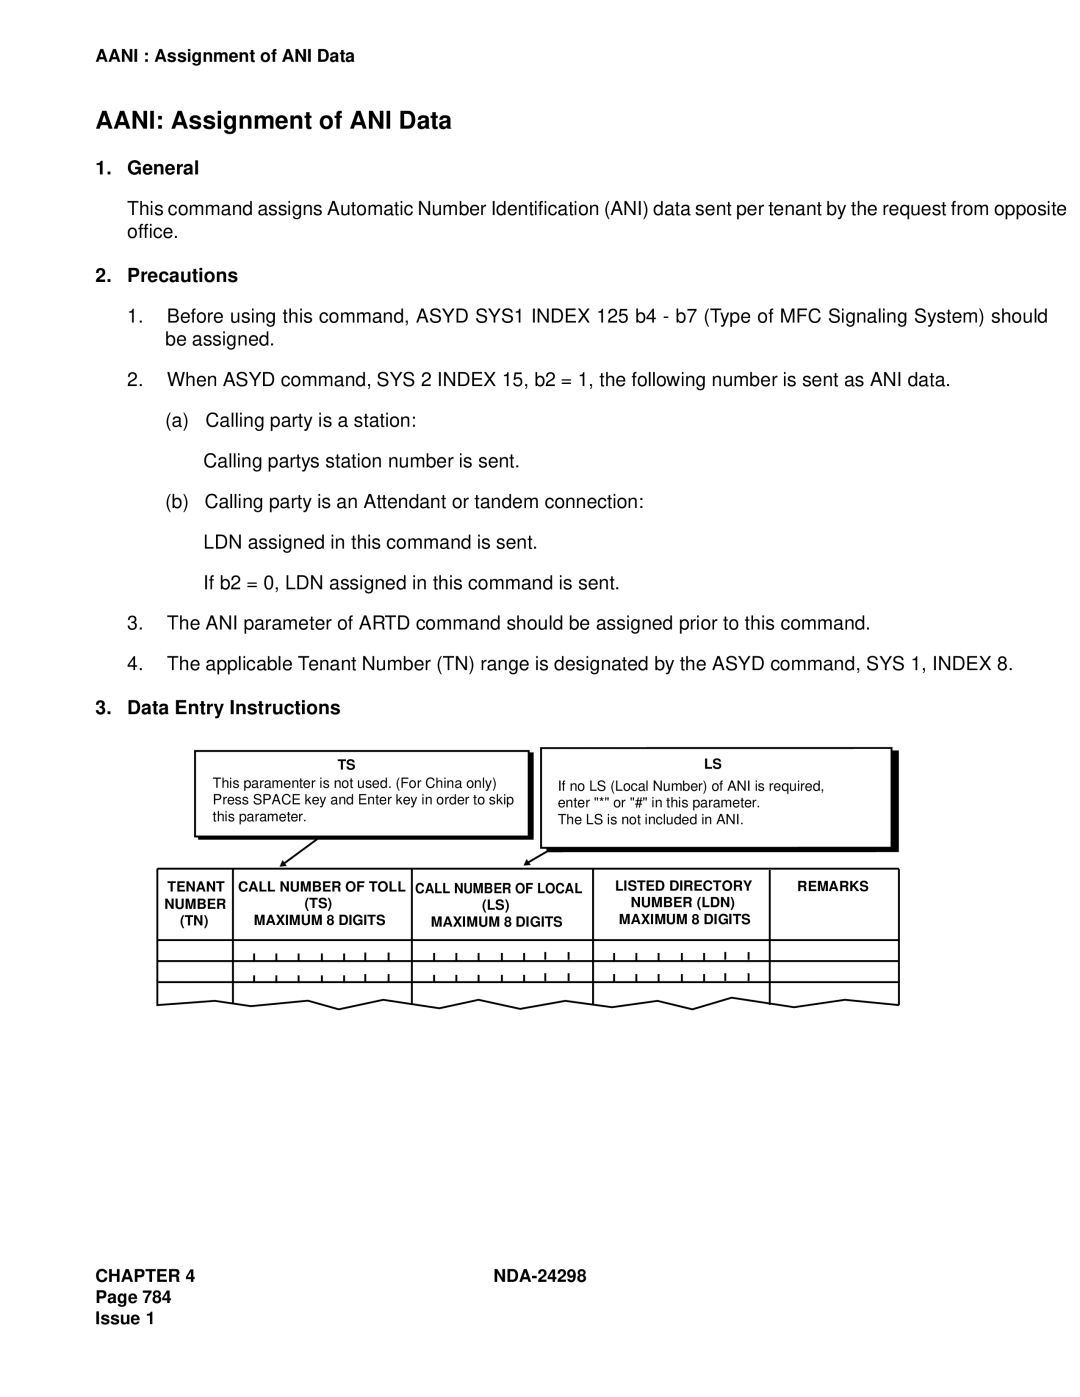 NEC NDA-24298 manual Aani Assignment of ANI Data 